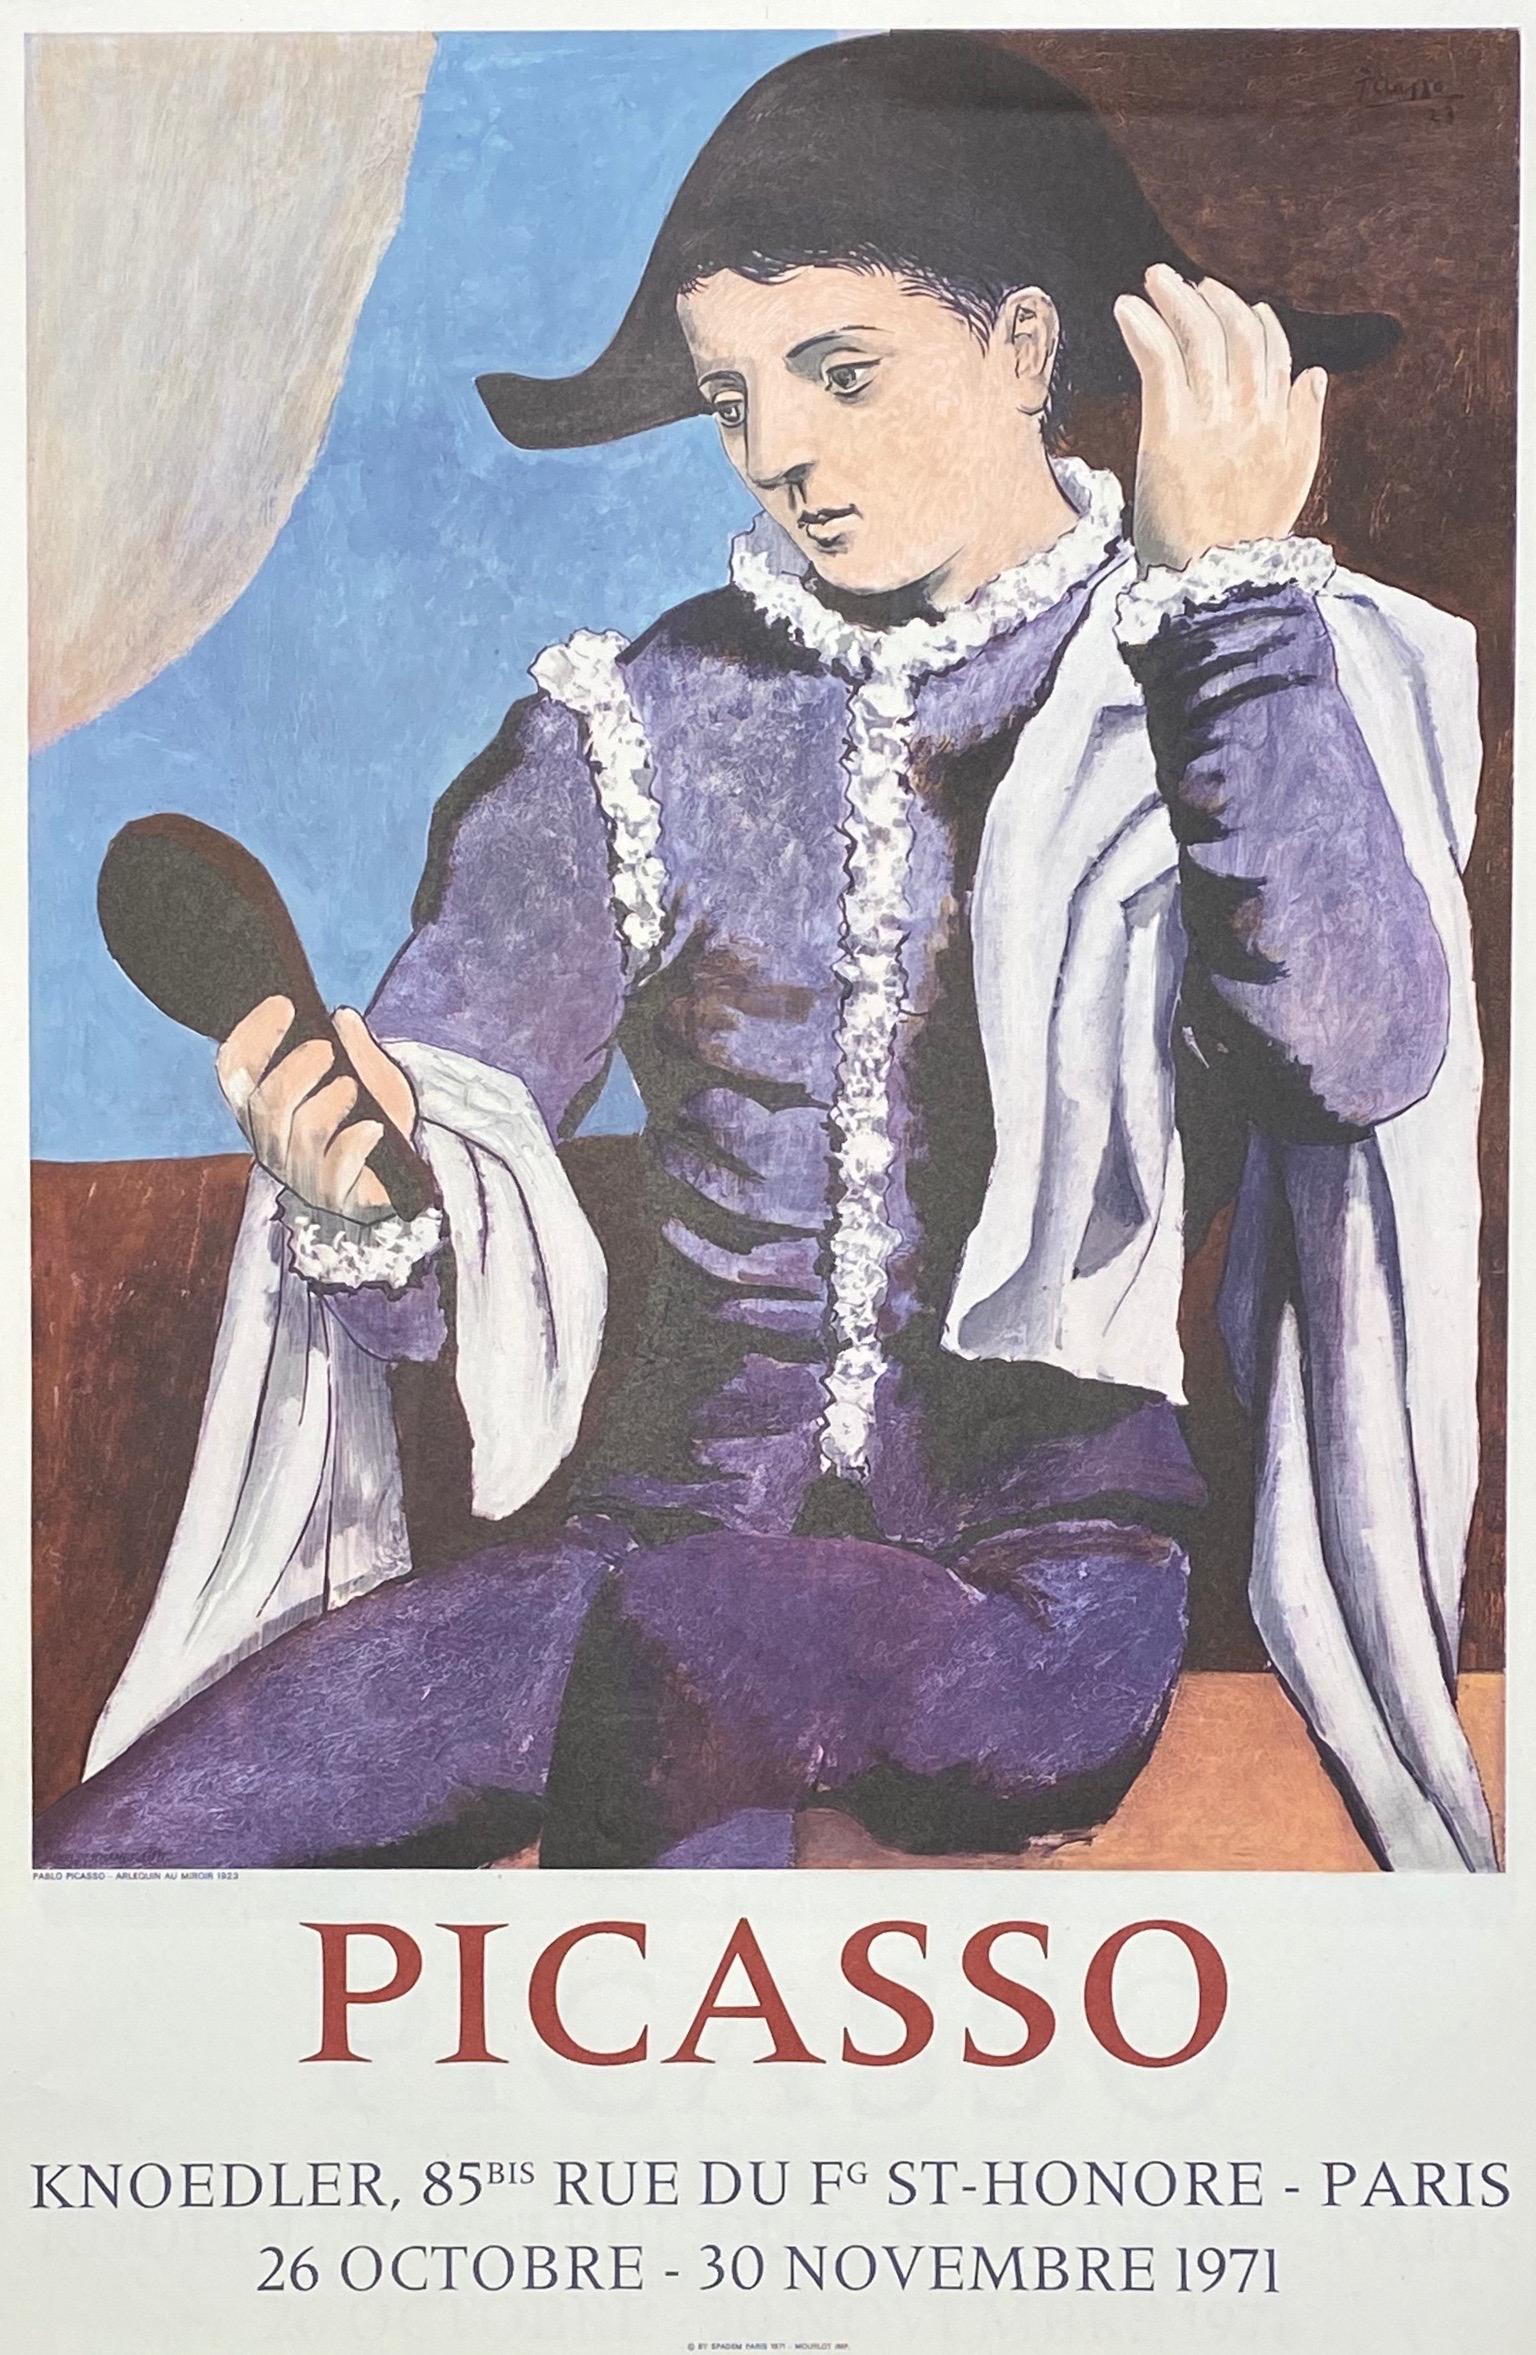 Arlequin au miroir 1923 litho offset on paper after Pablo Picasso 